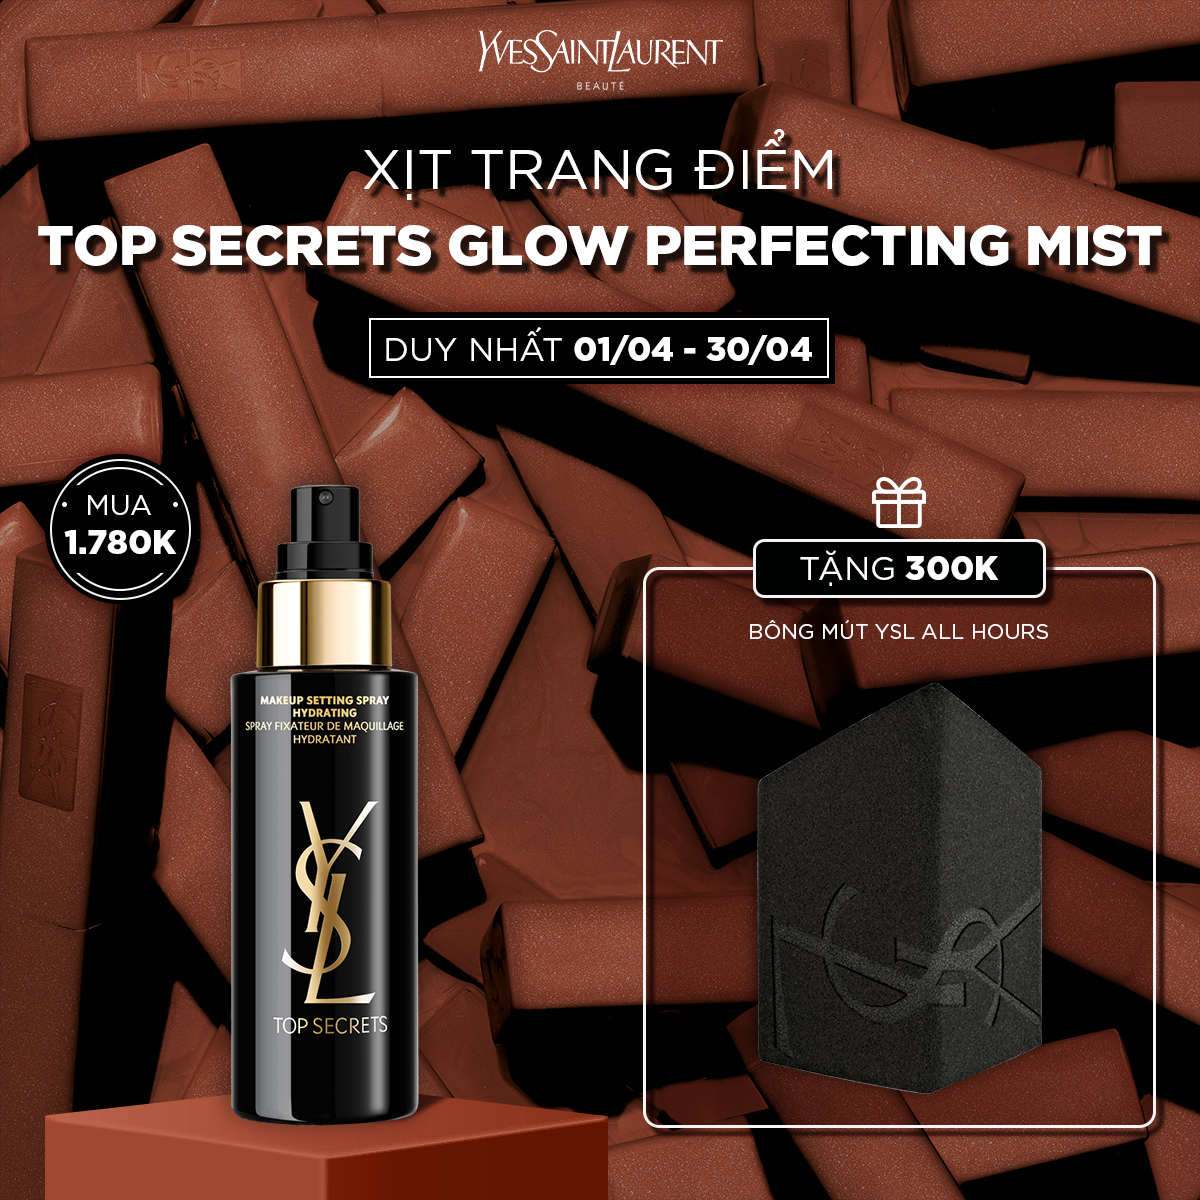 [APR] Xịt trang điểm Top Secrets Glow Perfecting Mist